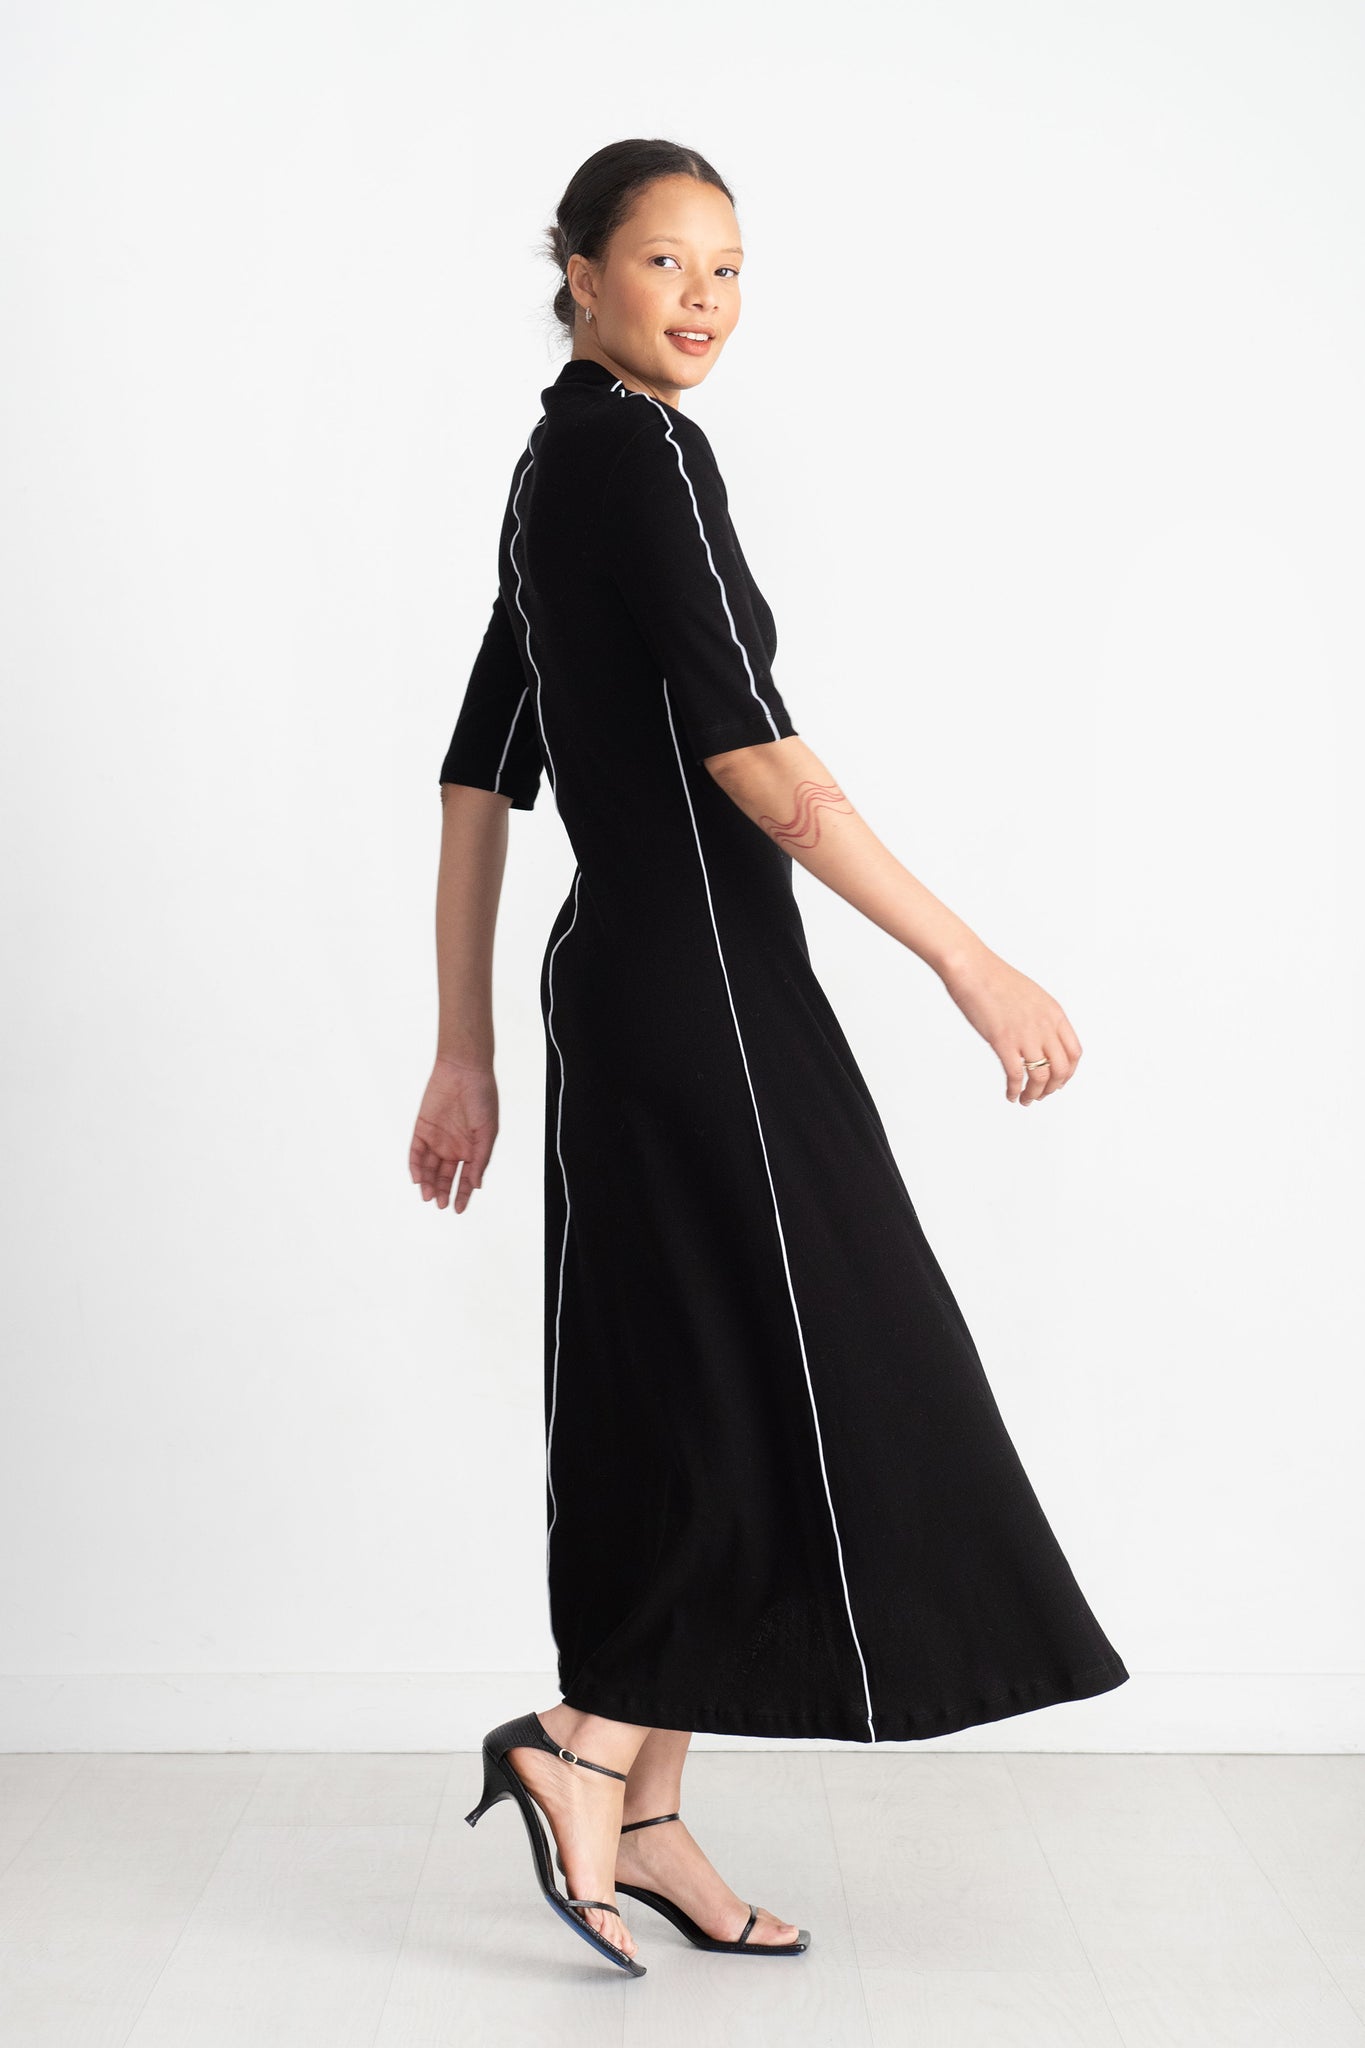 ROSETTA GETTY - Contrast Stitch Mock Neck Dress, Black